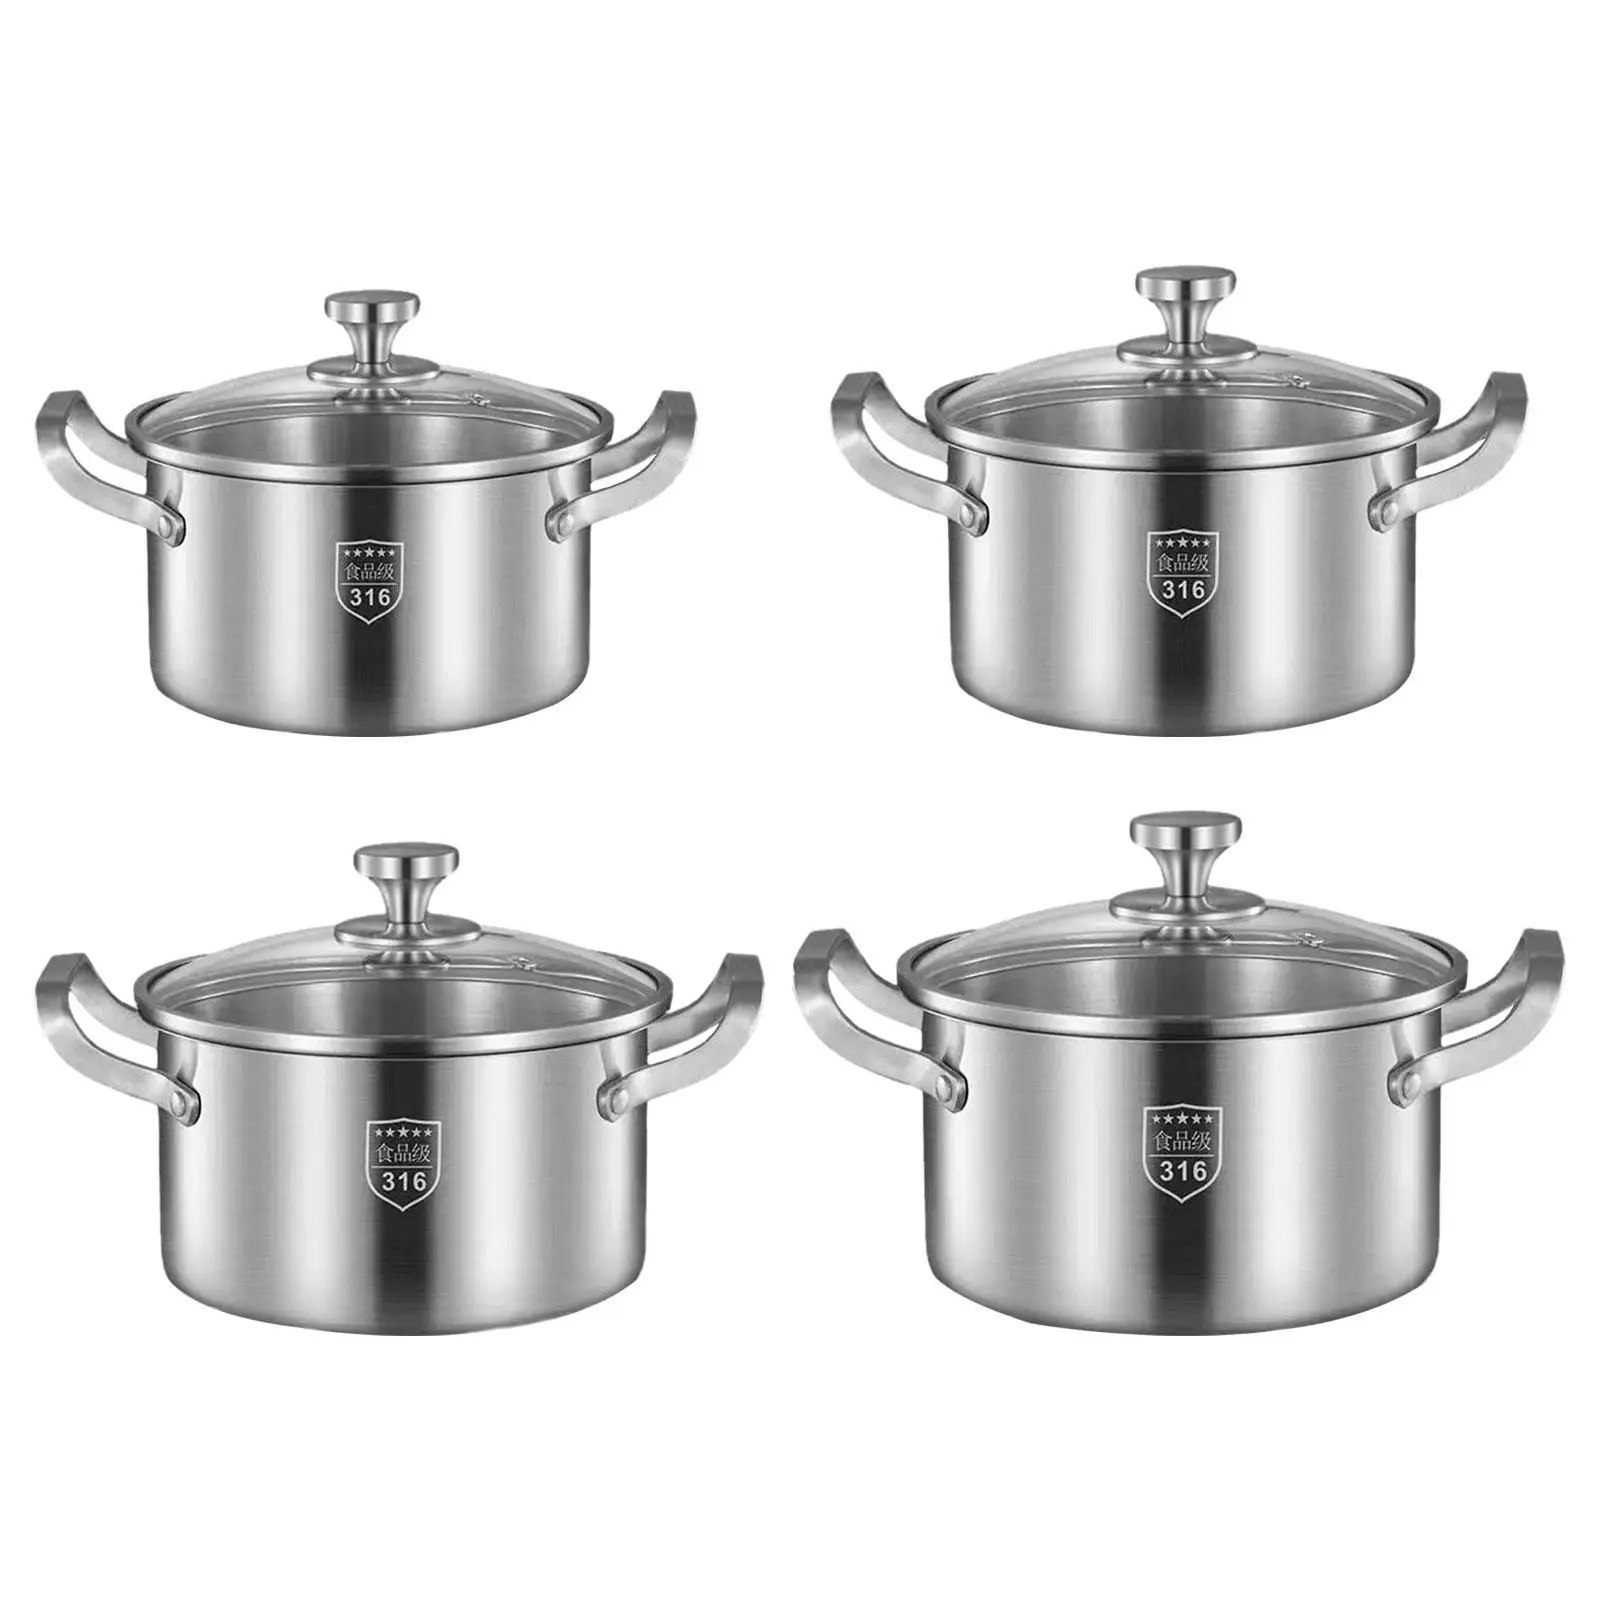 Soup Pot Cookware Ergonomic Handle Saucepan Frying Pan Cooking Pot Stockpot Stainless Steel for Restaurant Bar Kitchen Cafe